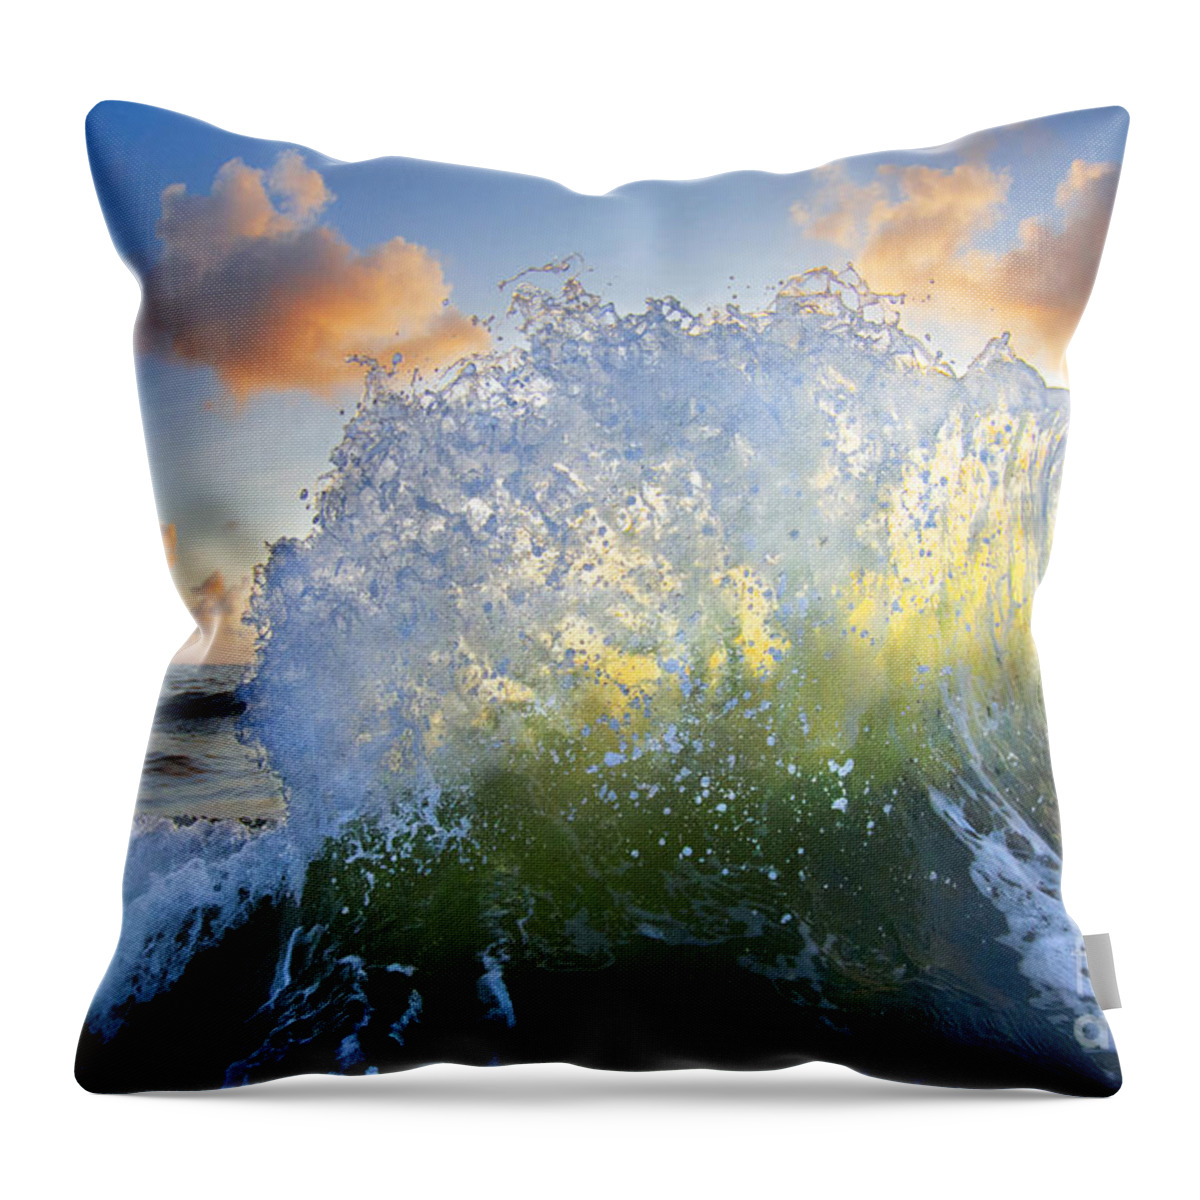  Ocean Bouquet Throw Pillow featuring the photograph Ocean Bouquet - part 3 of 3 by Sean Davey